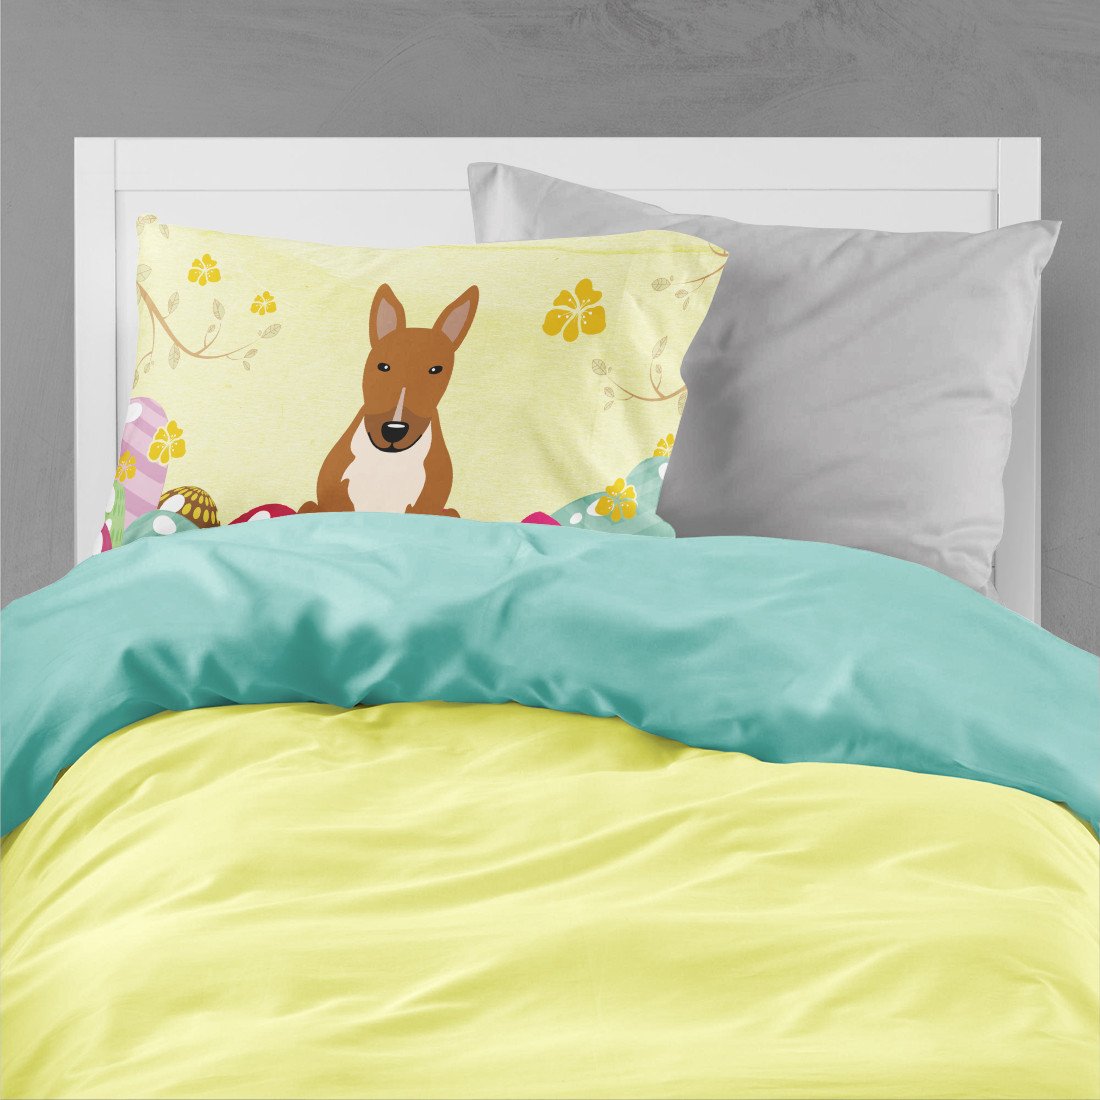 Easter Eggs Bull Terrier Red Fabric Standard Pillowcase BB6134PILLOWCASE by Caroline's Treasures